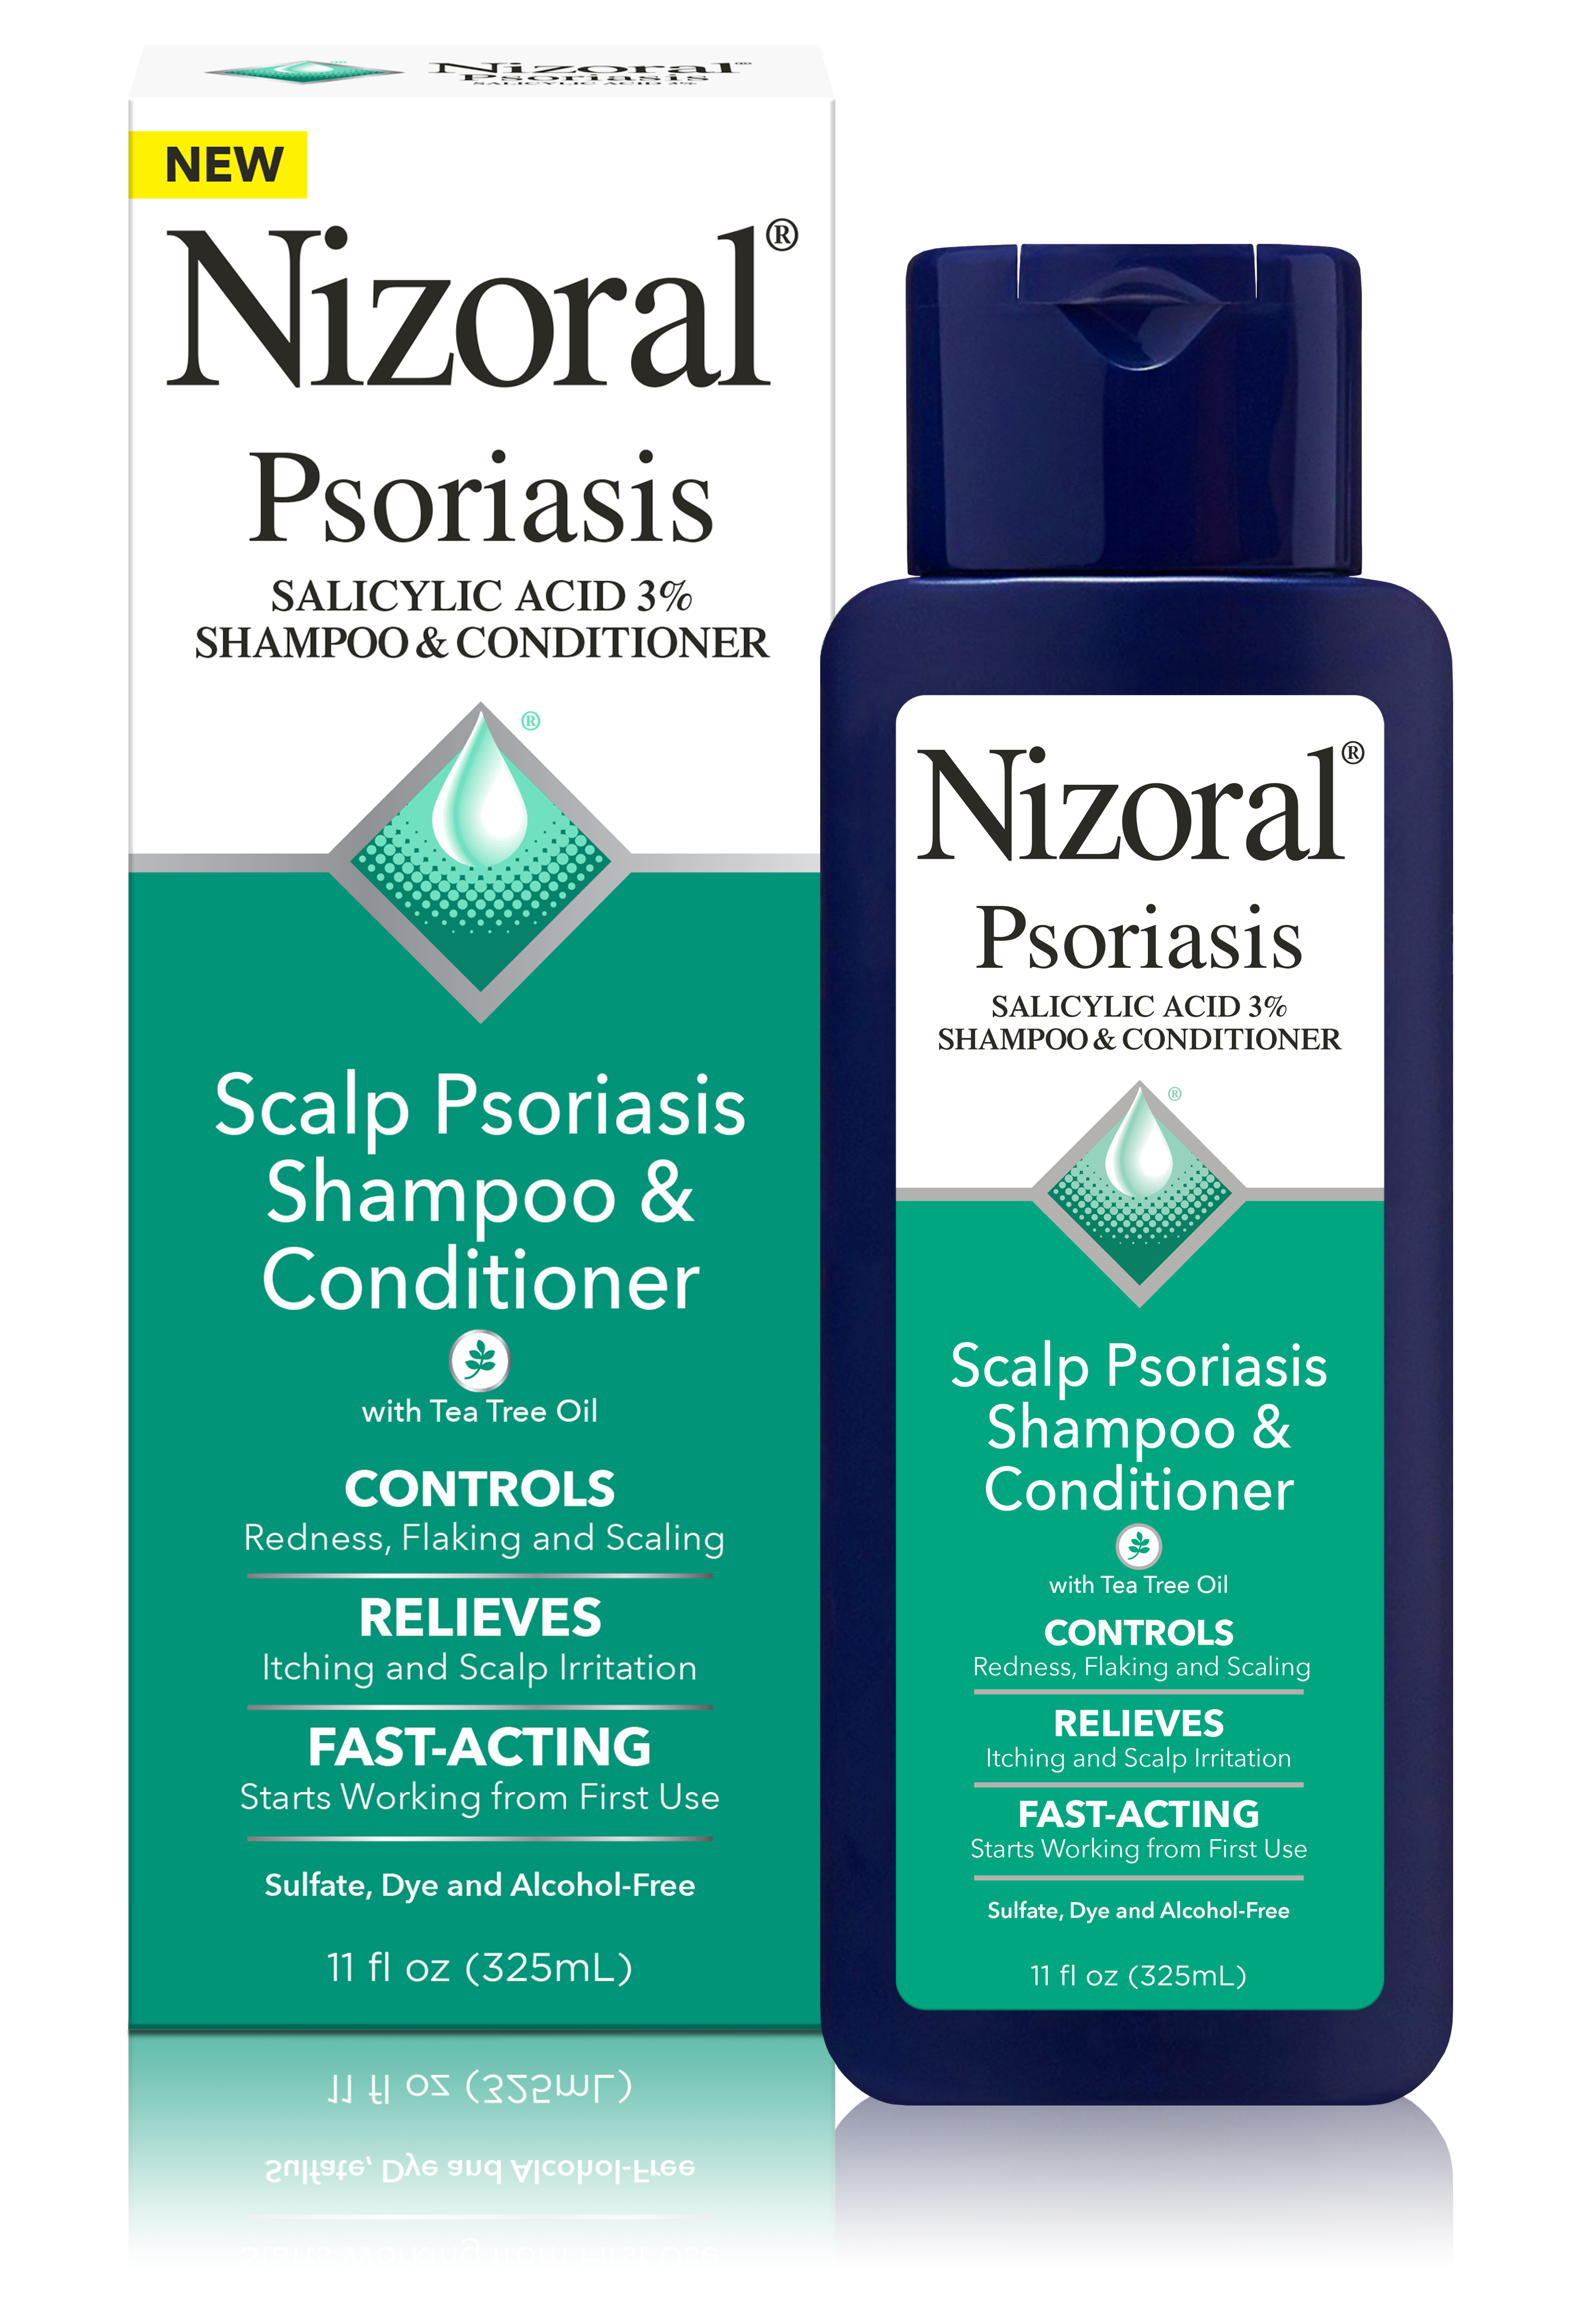 nizoral psoriasis scalp shampoo and conditioner